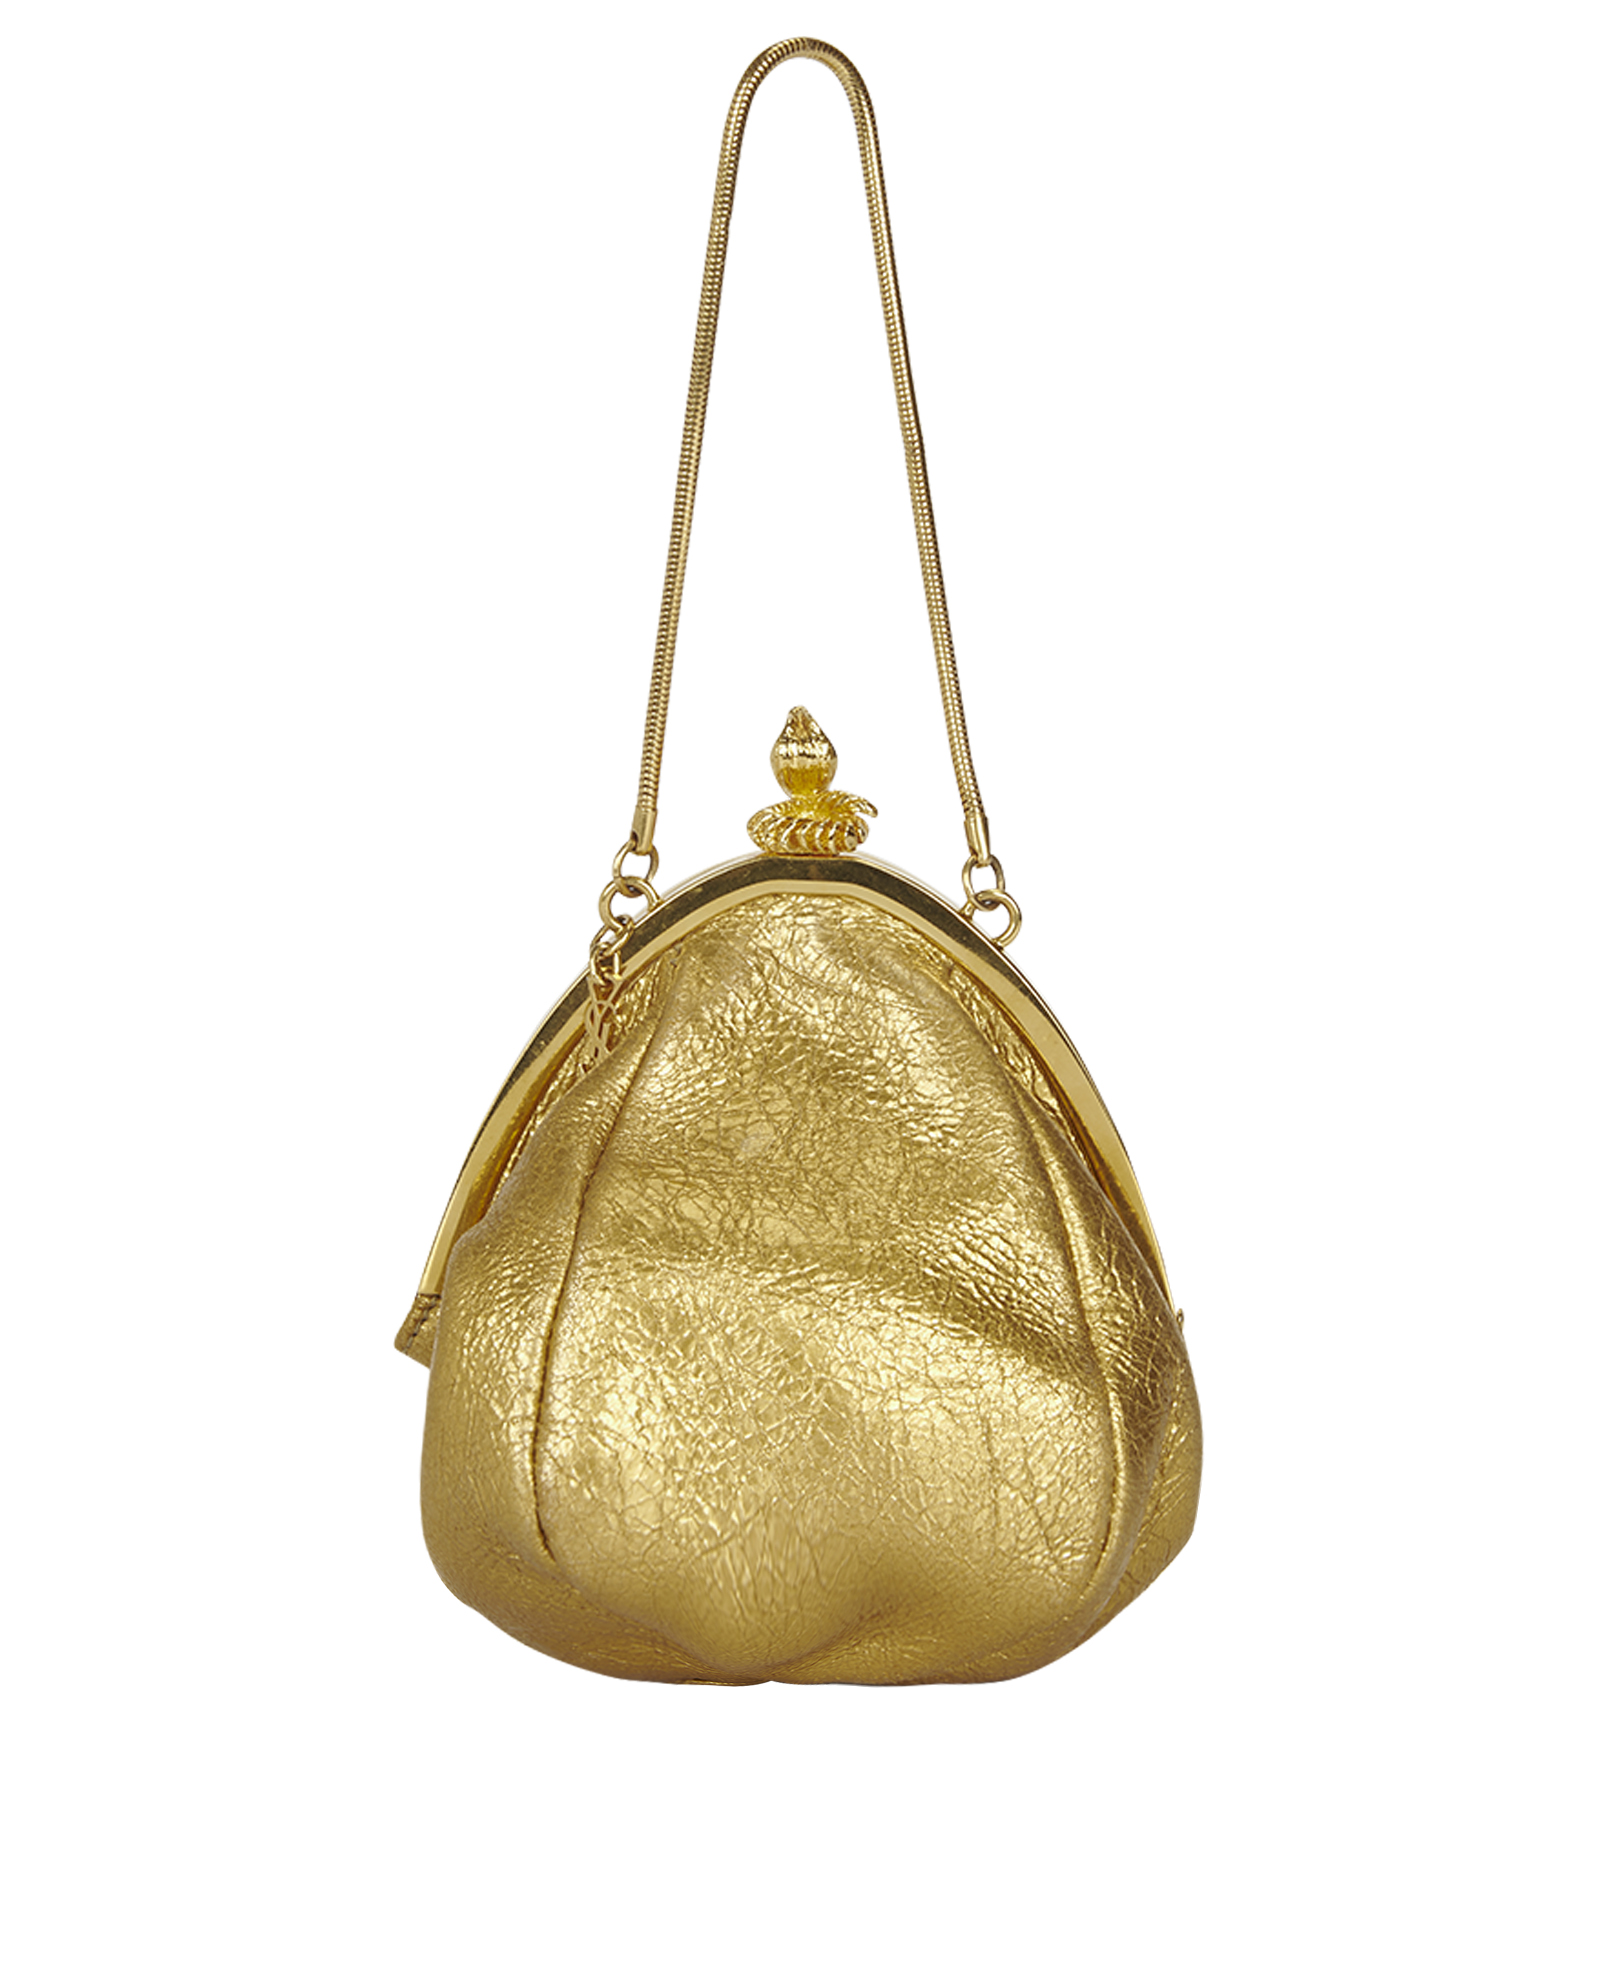 Saint Laurent Handbag  Buy or Sell your Designer handbags